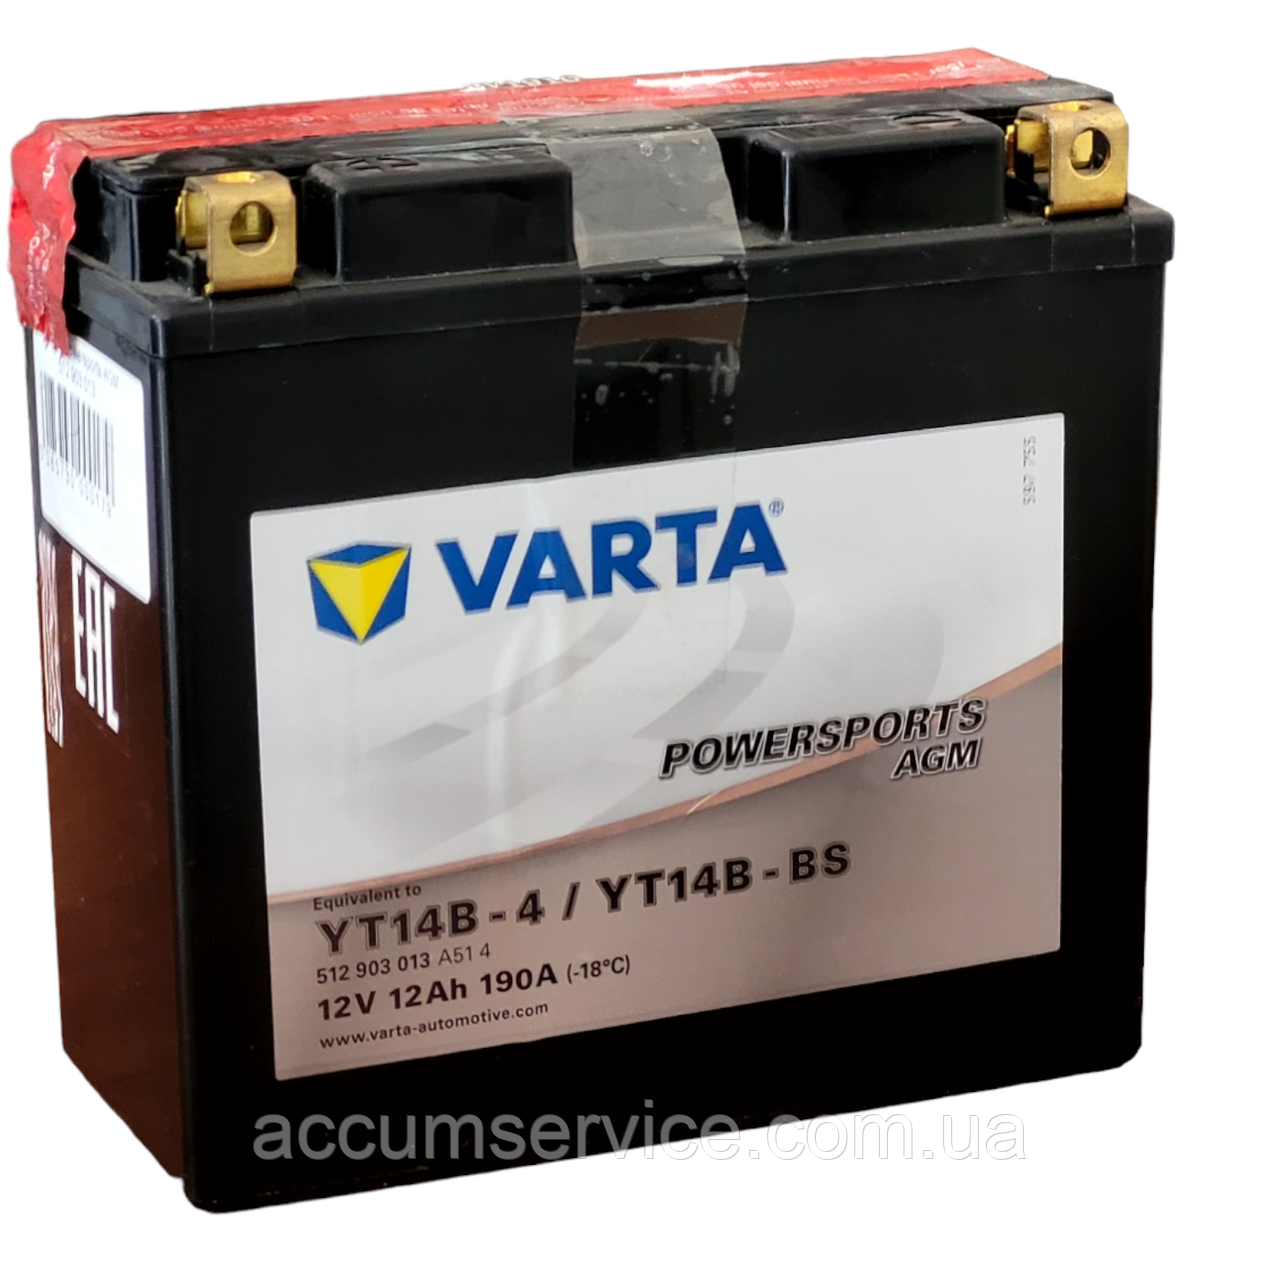 Акумулятор Varta Powersports AGM 512014020 I314